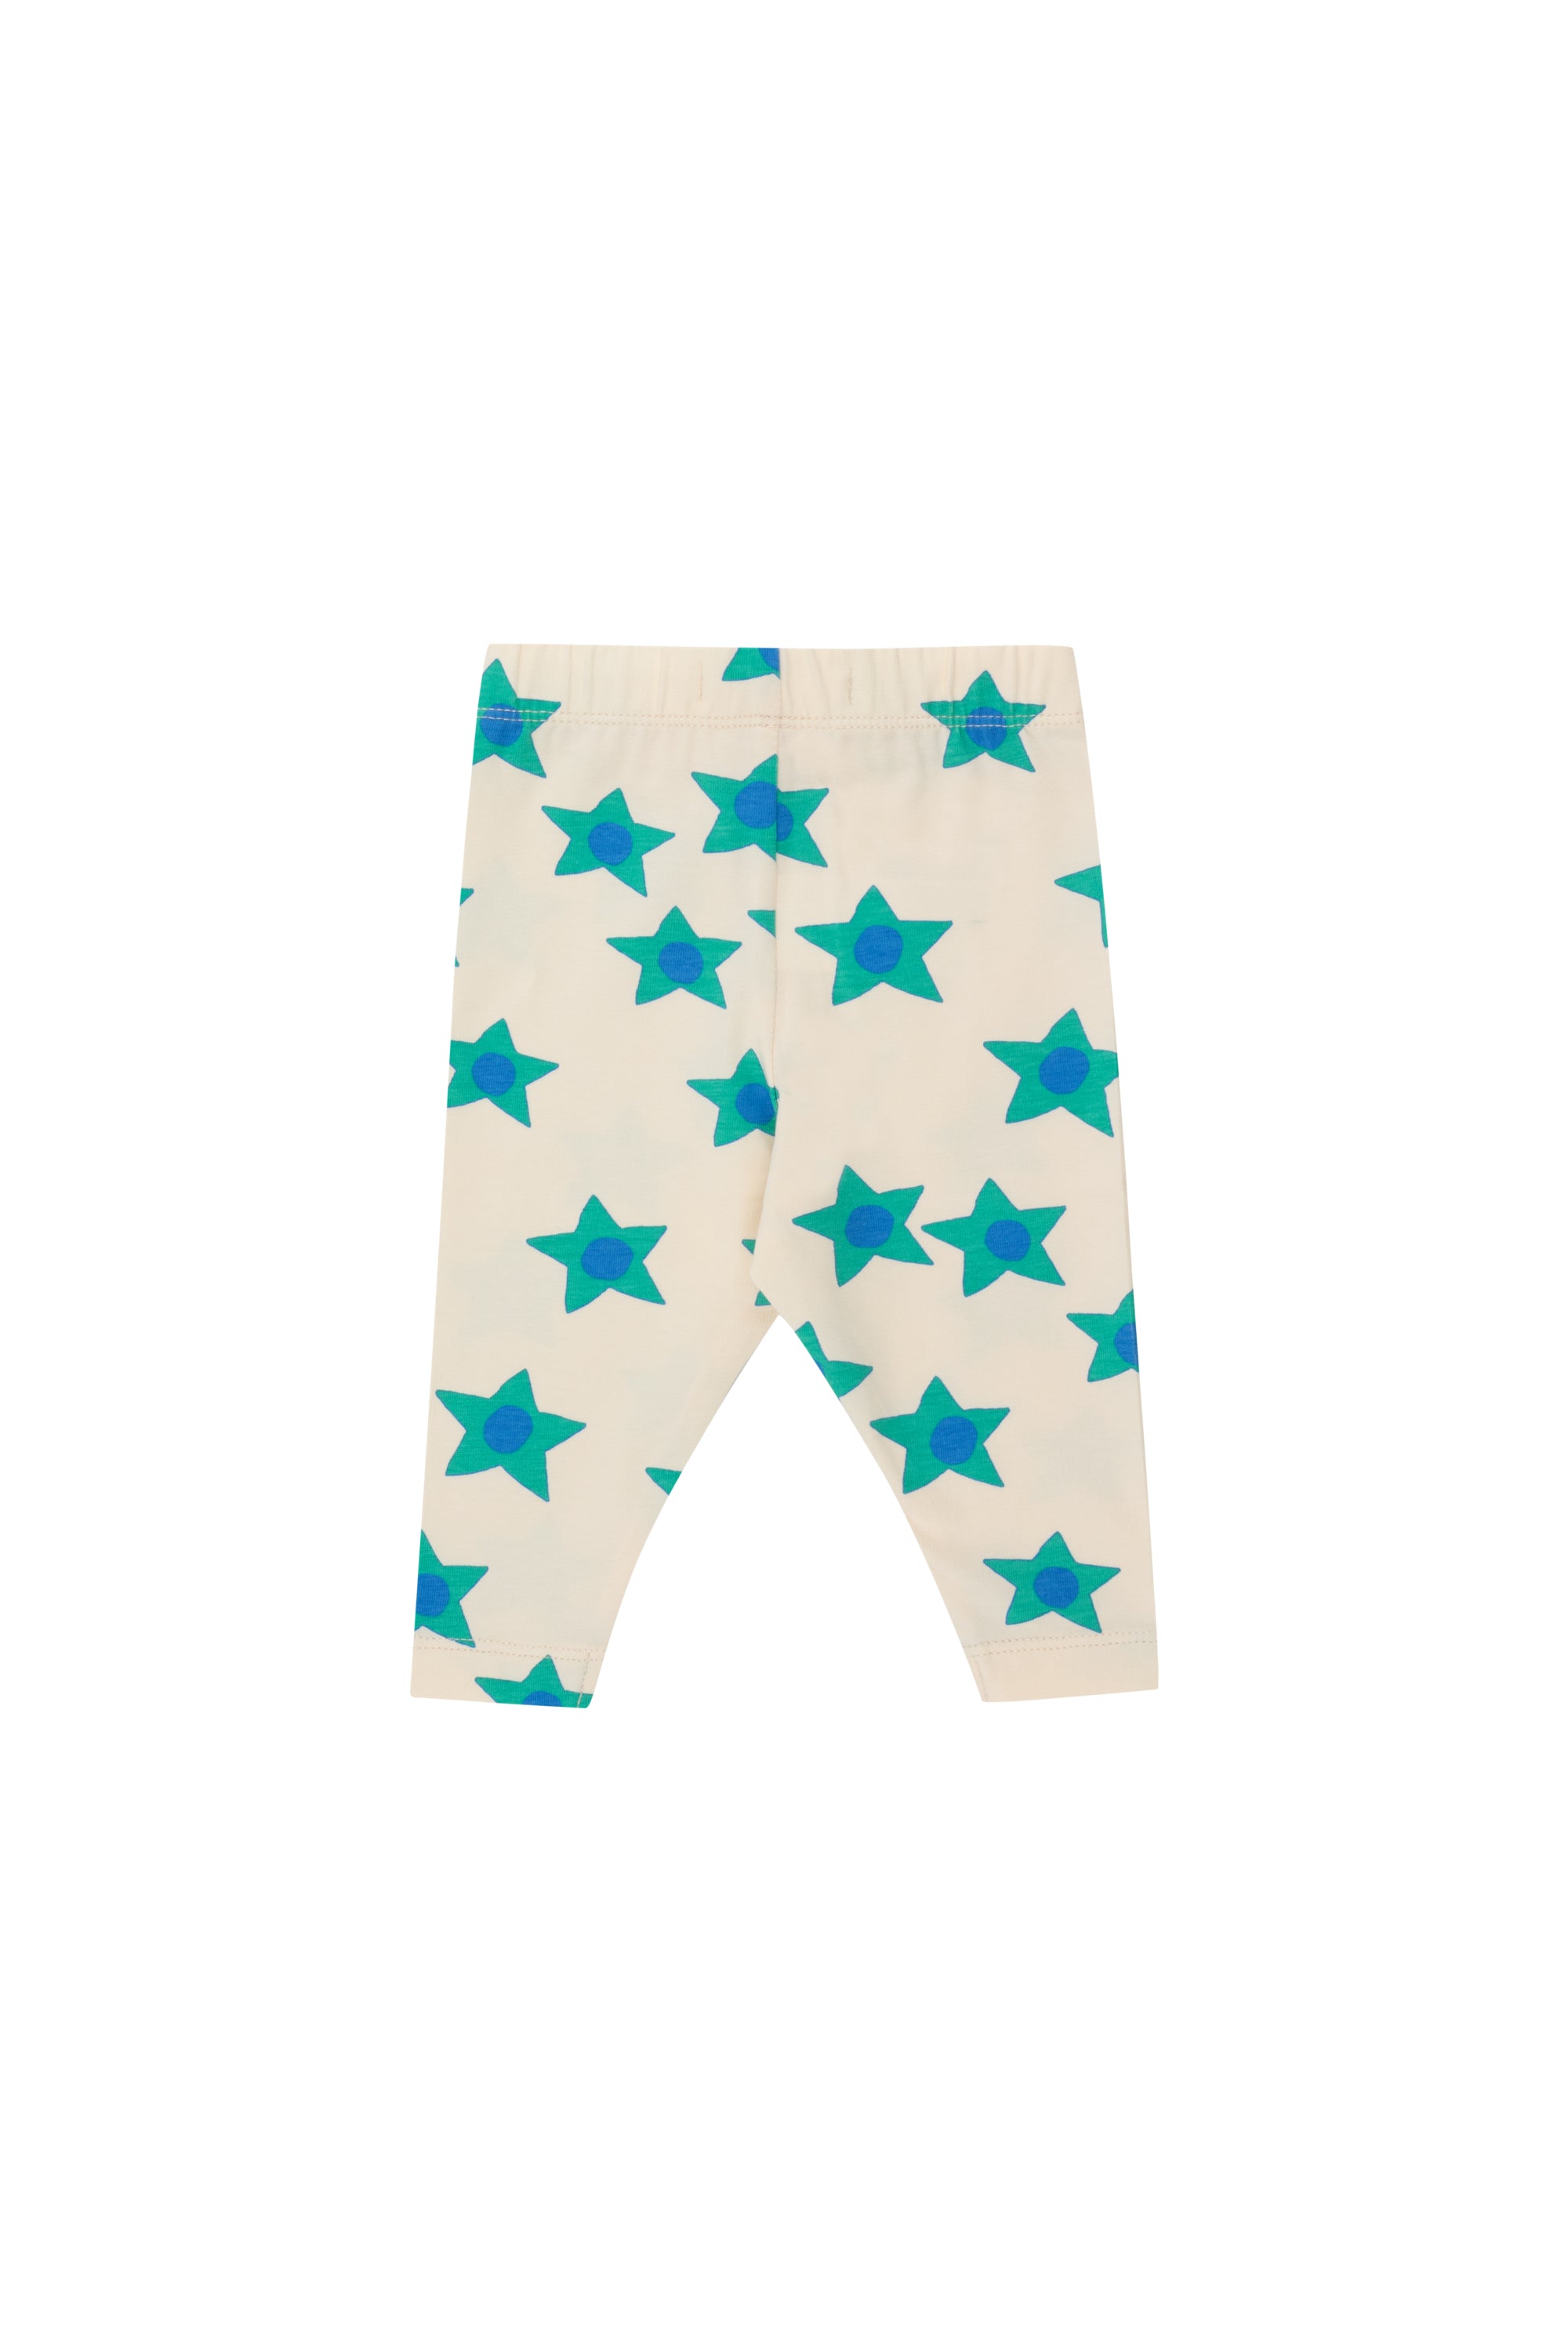 TinyCottons Starflowers Baby Pant